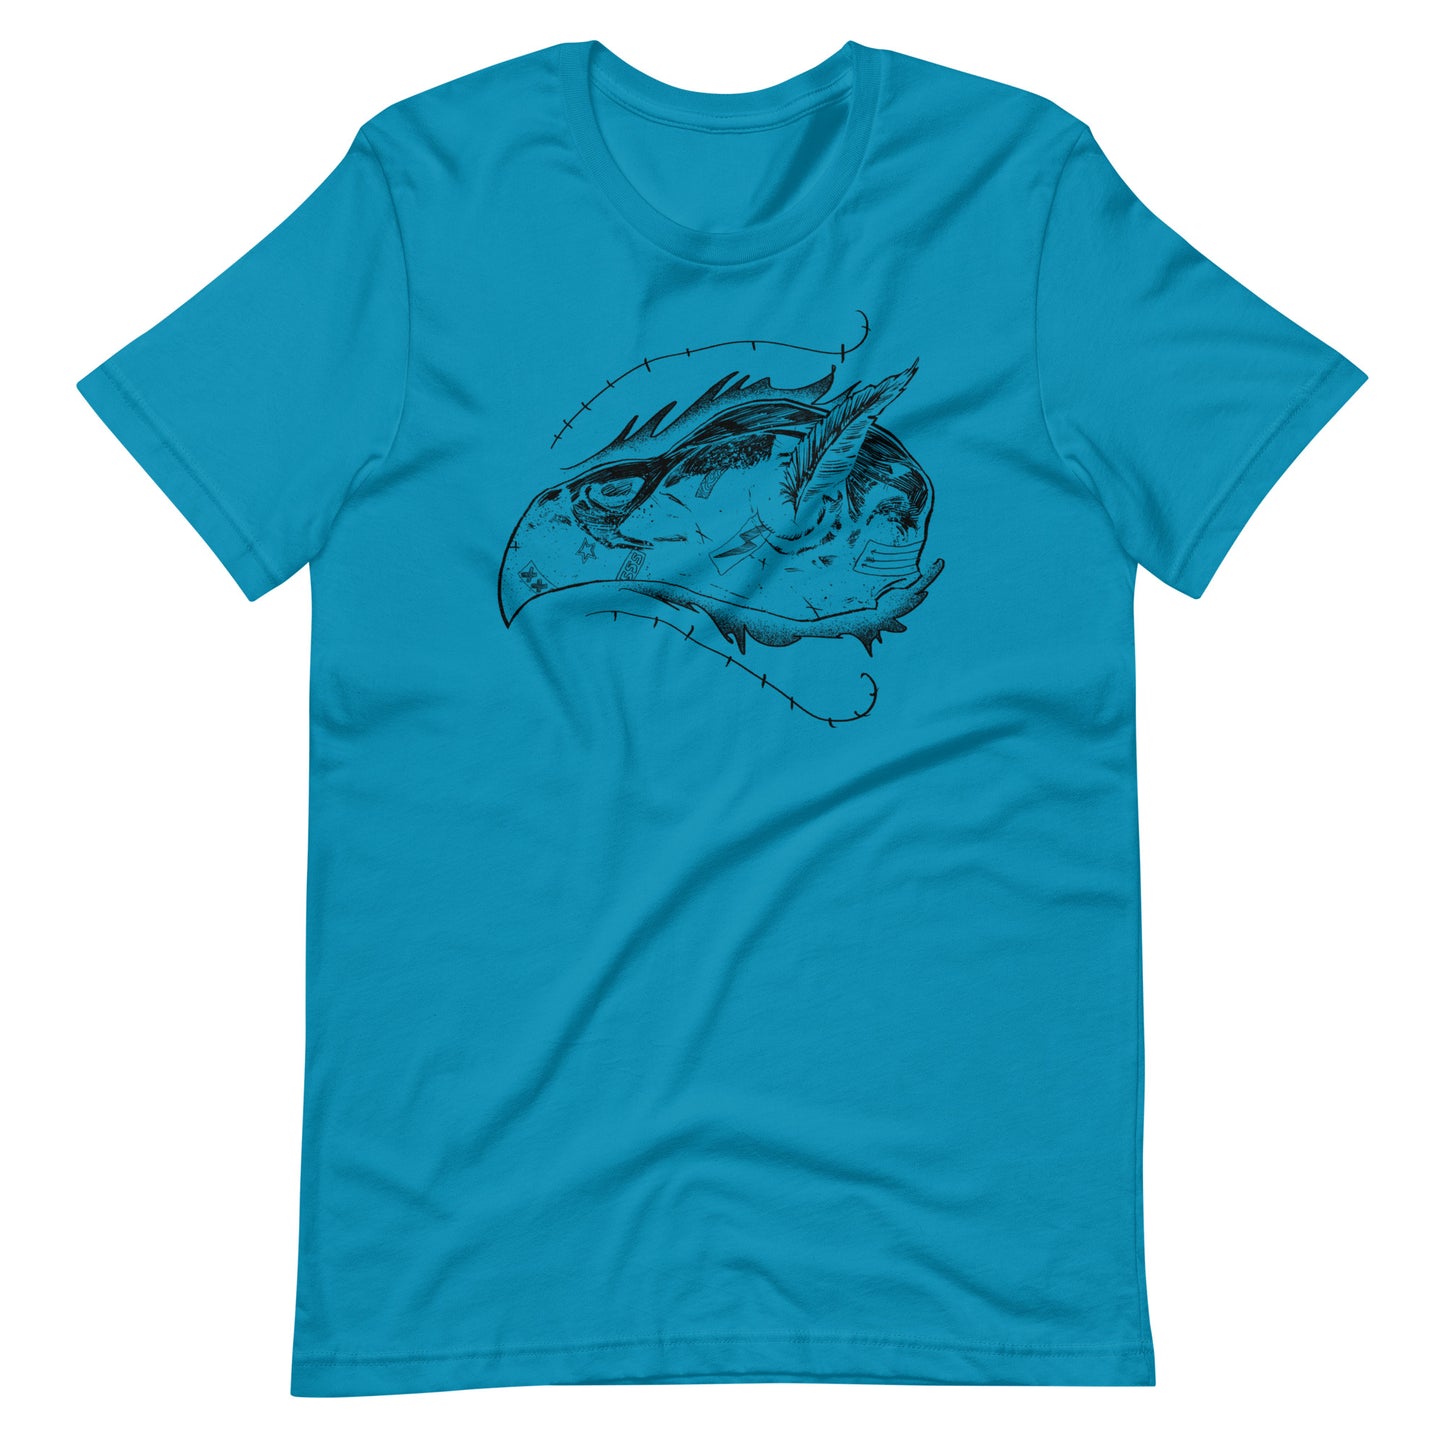 Skull Bird Black - Men's t-shirt - Aqua Front